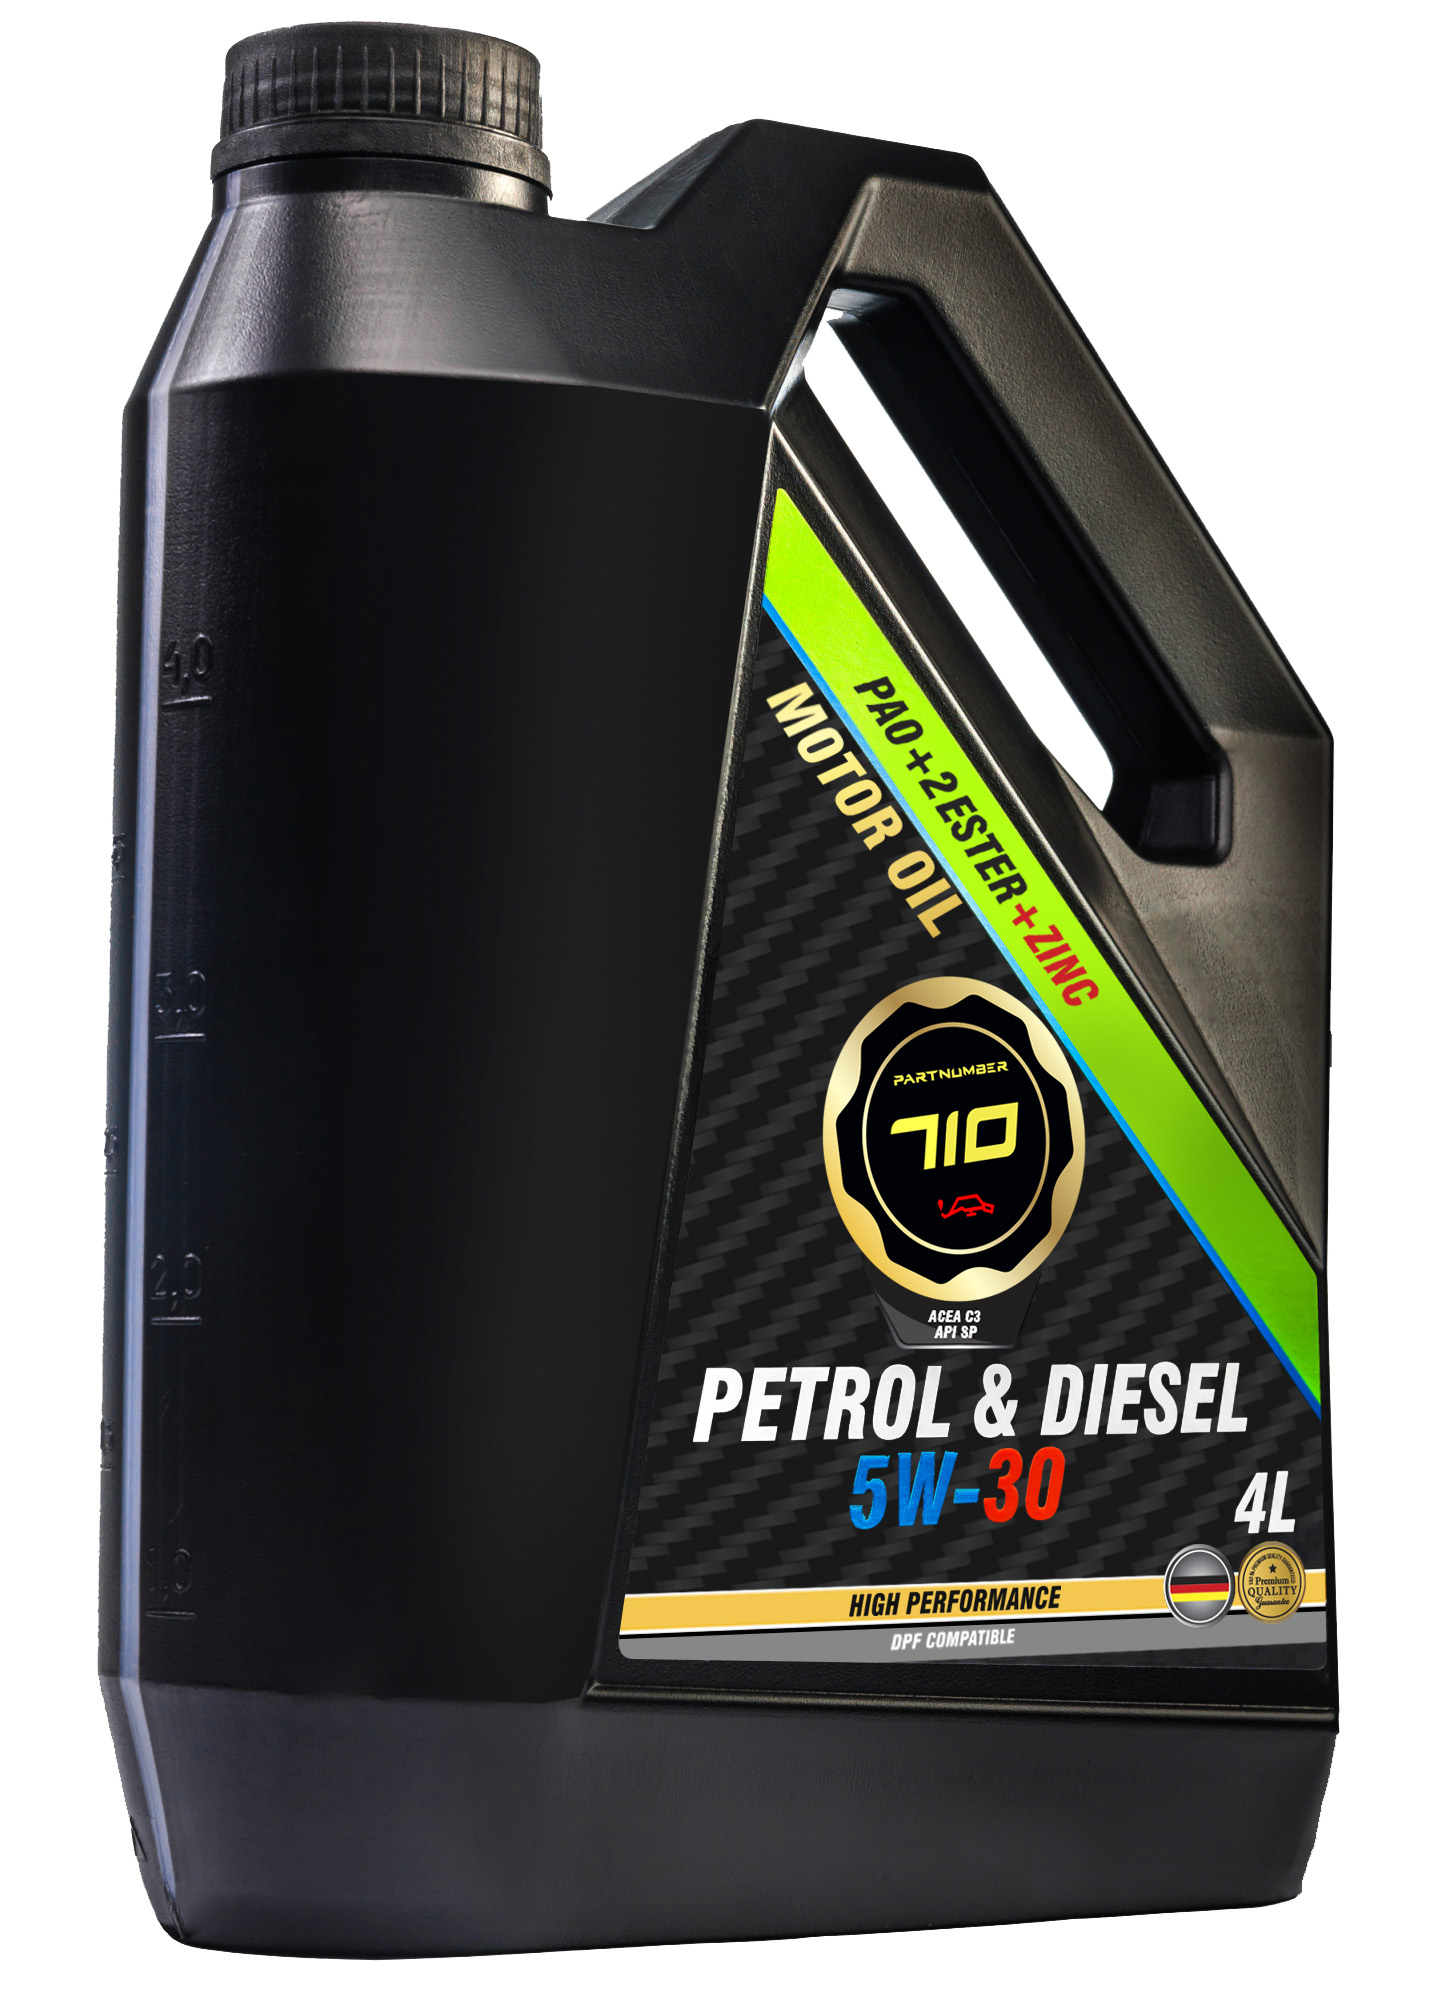 картинка Масло моторное PARTNUMBER 710 Petrol & Diesel 5W-30 4л